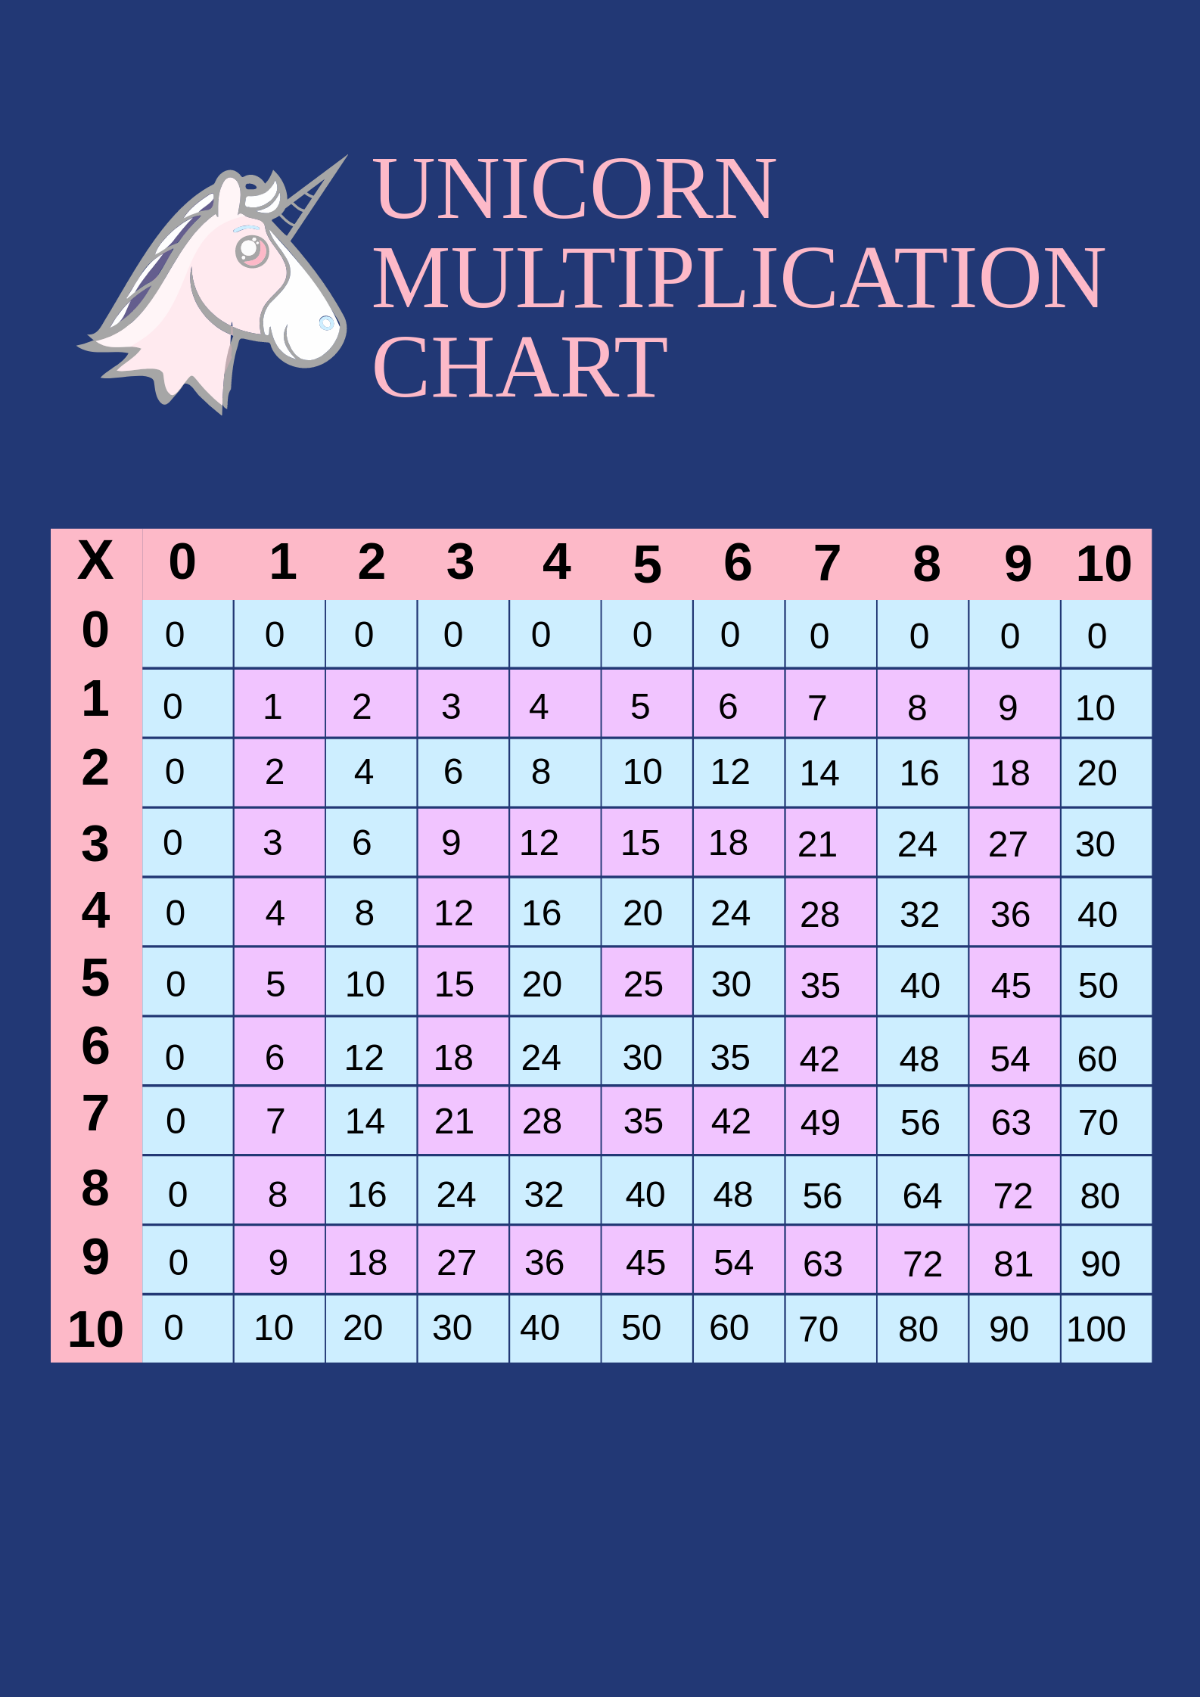 Free Unicorn Multiplication Chart Template